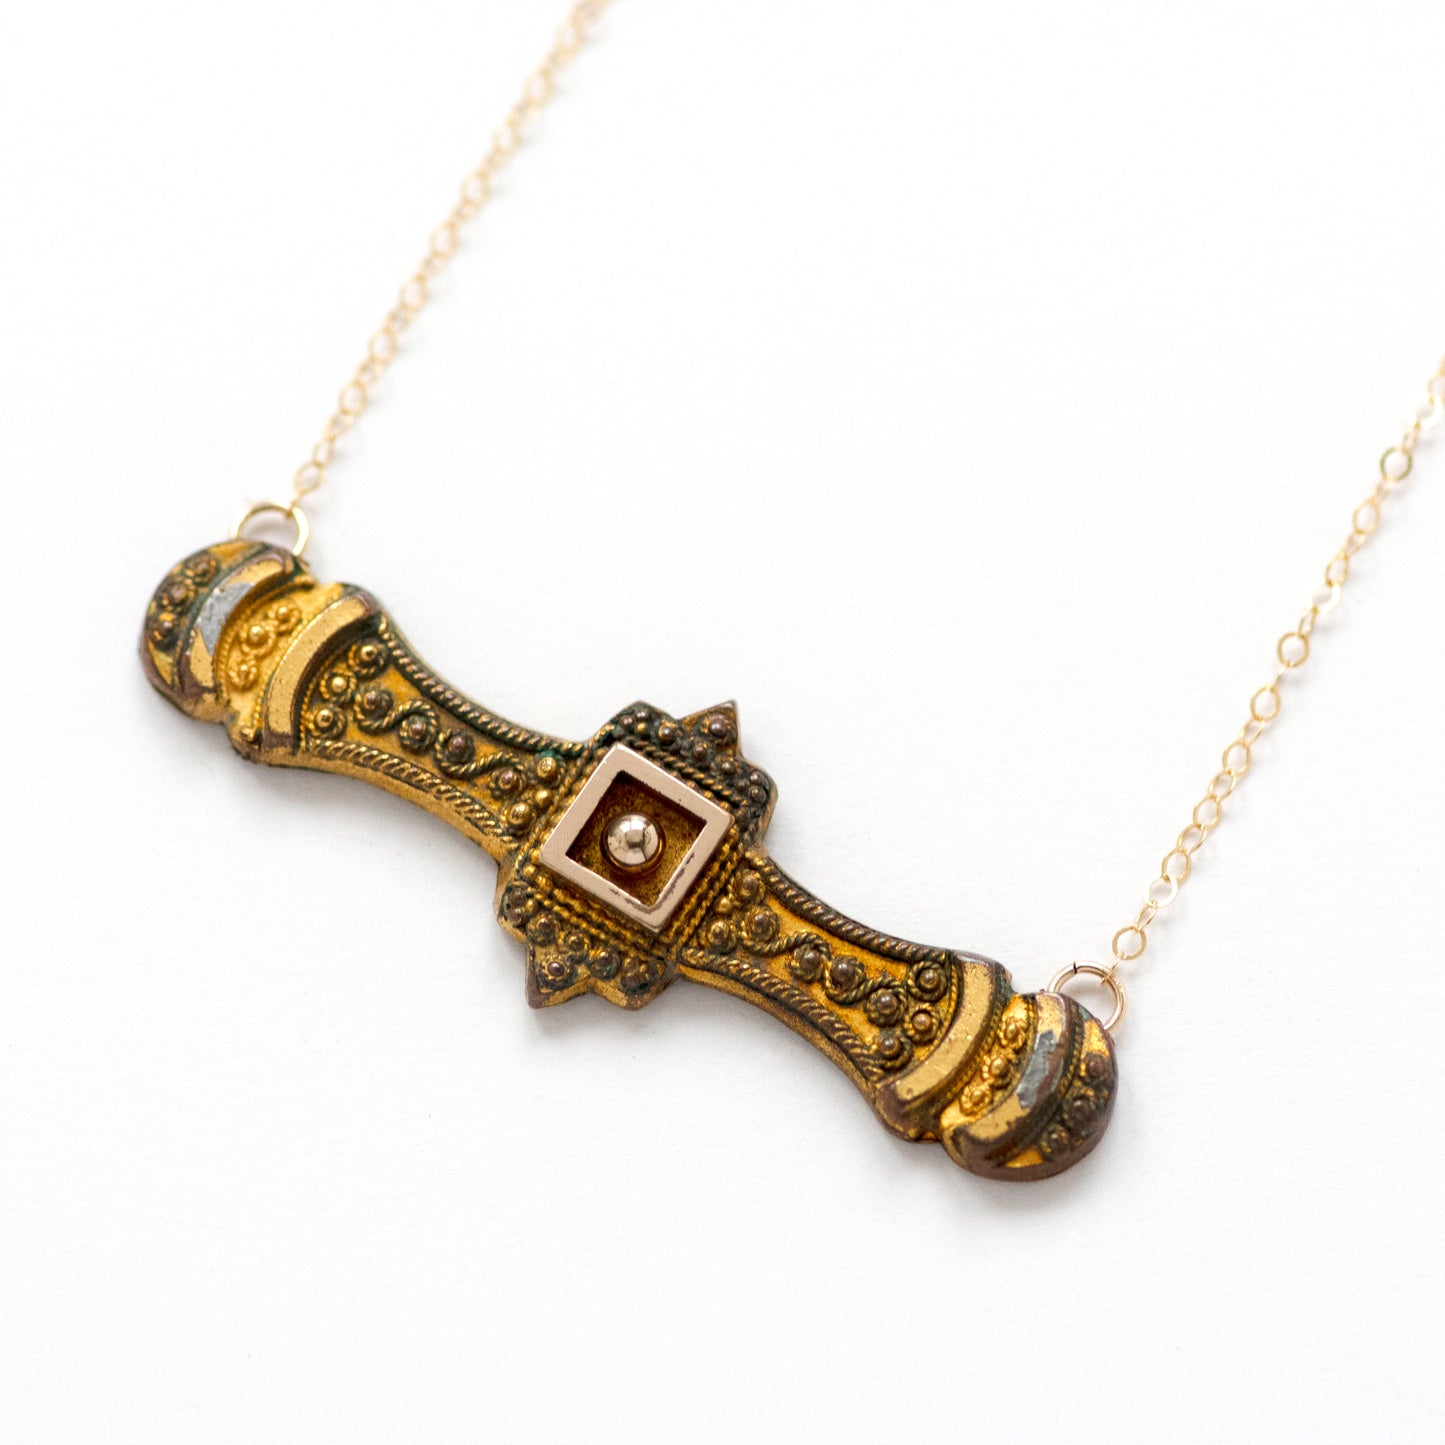 Antique Etruscan Revival Bar Pin Necklace